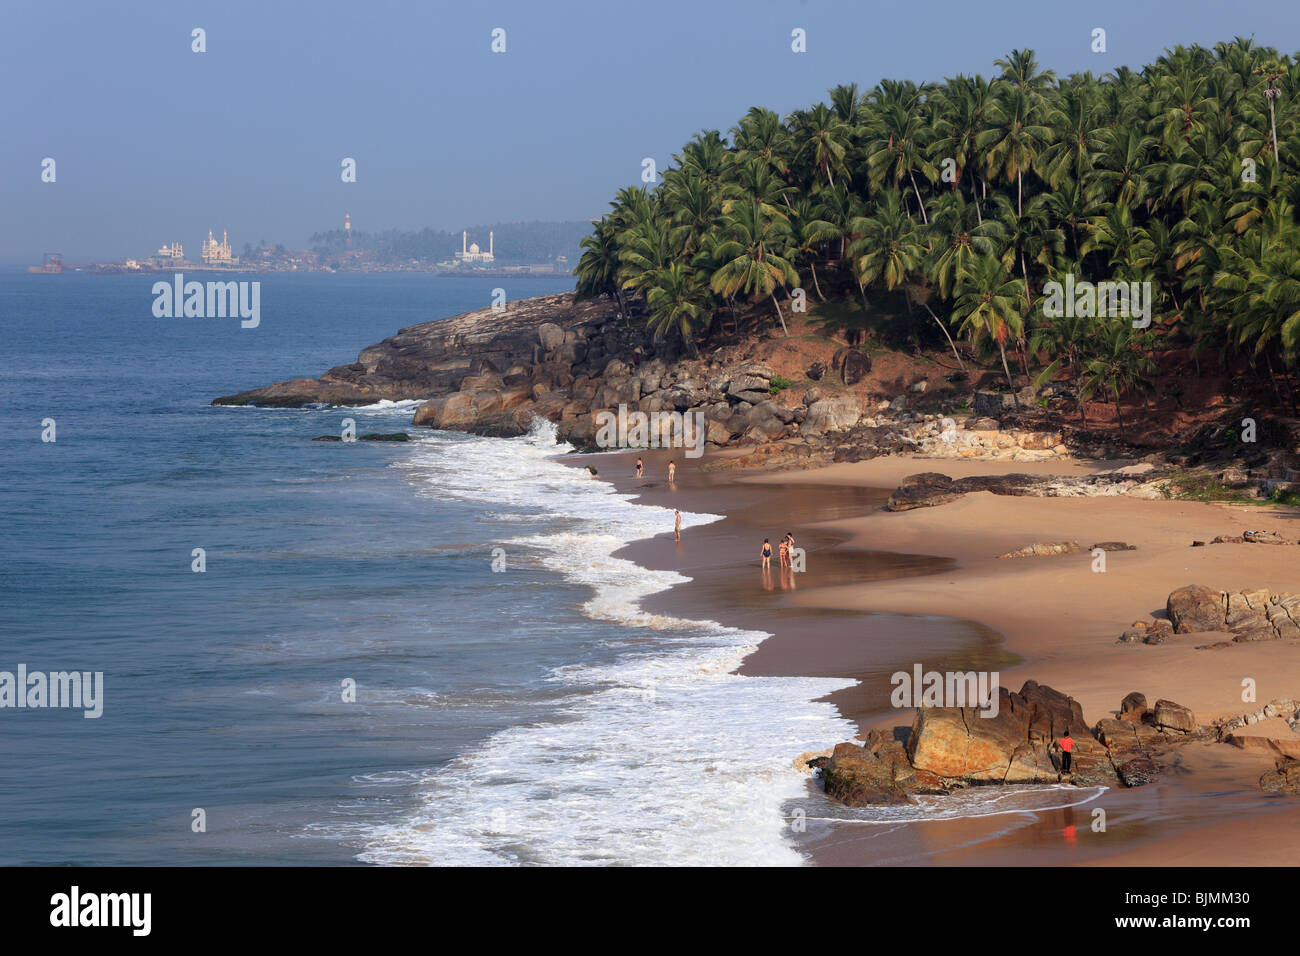 Playa de arena al sur de Vizhnijam, Malabarian costa Malabar, el estado de Kerala, India, Asia Foto de stock